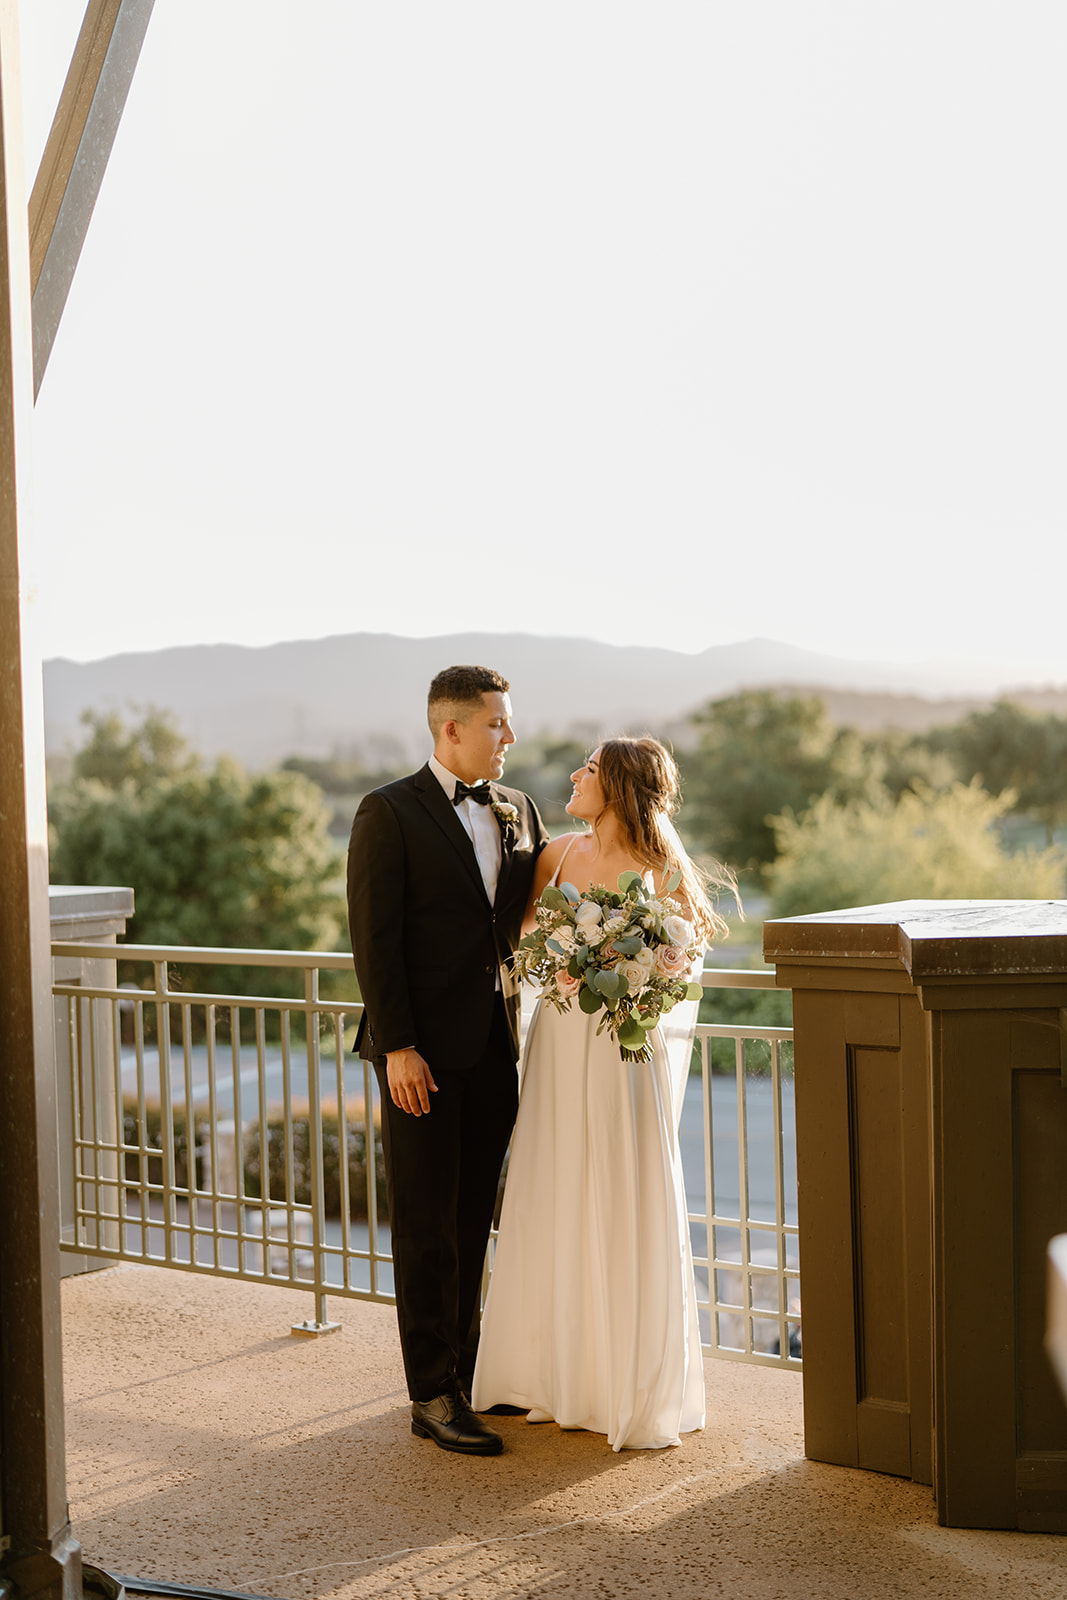 Sydney Jai Photography - Northern California wedding photographer, bride and groom photos, golden hour wedding photos